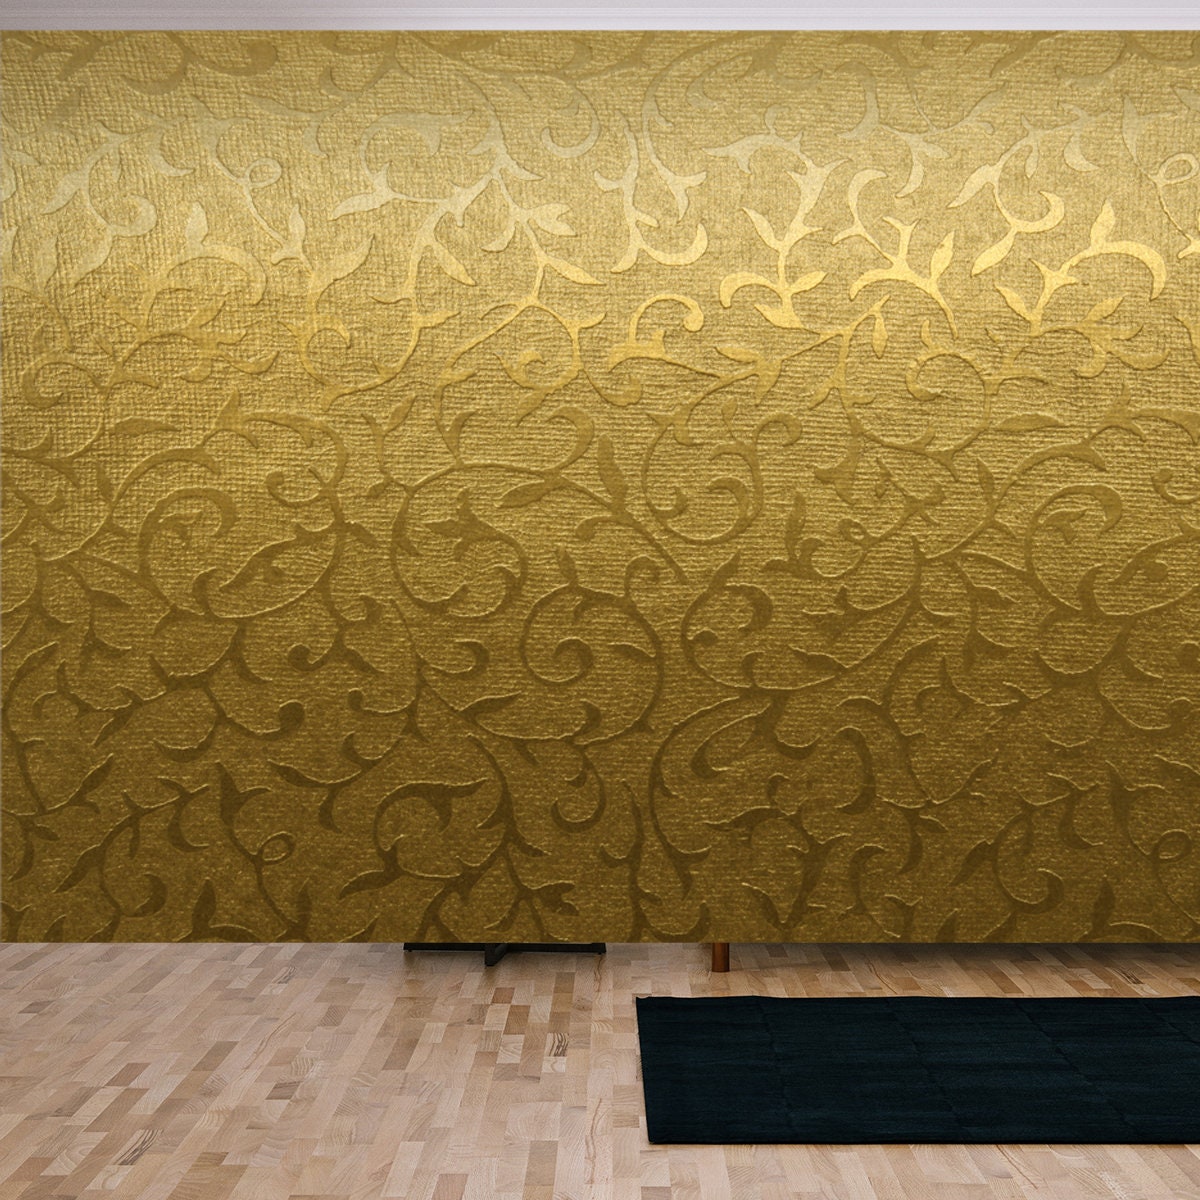 Golden Floral Ornament Brocade Textile Pattern Wallpaper Living Room Mural